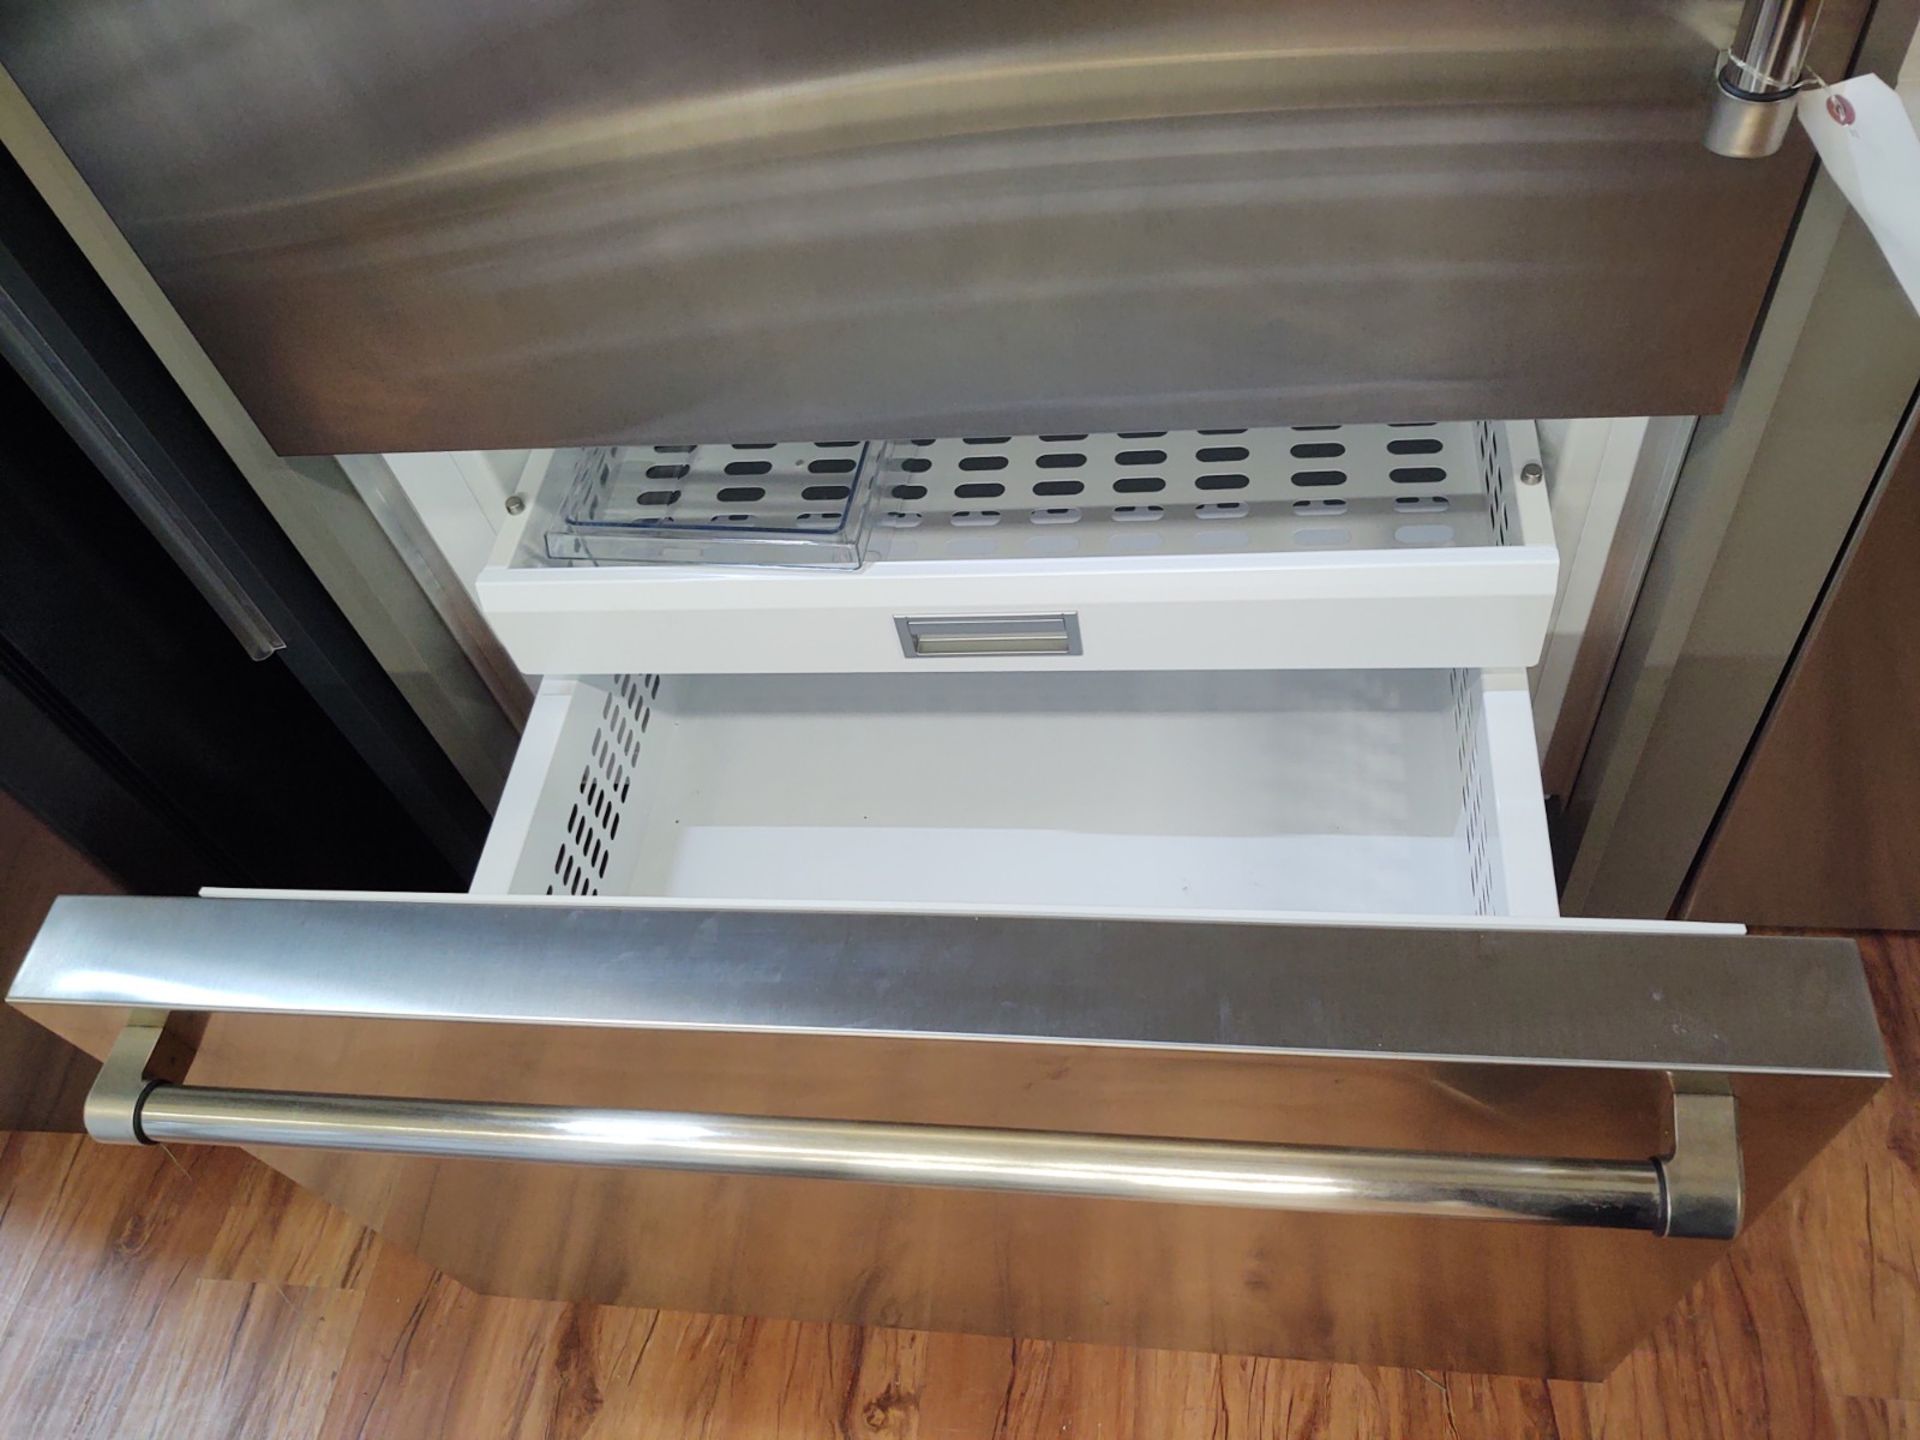 Bertazzoni 36" SS Freestanding French door Refrigerator #REF36DFZXNT, 83"H, (Missing Kick Panel) - Image 3 of 4